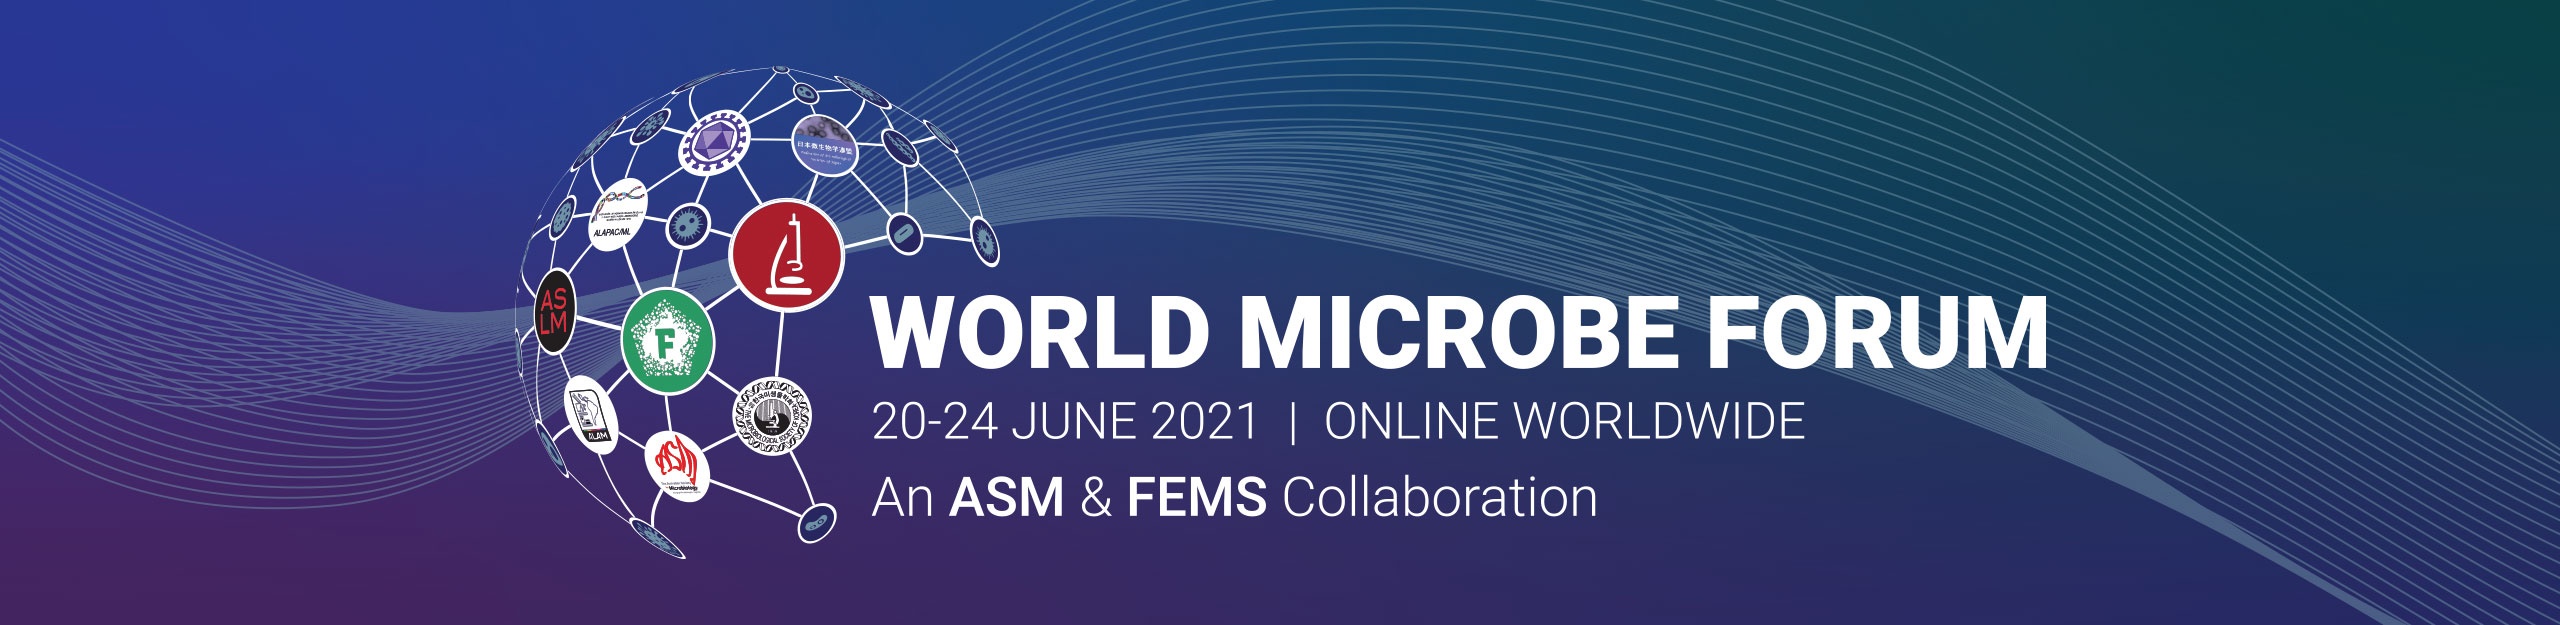 World Microbe Forum Masthead